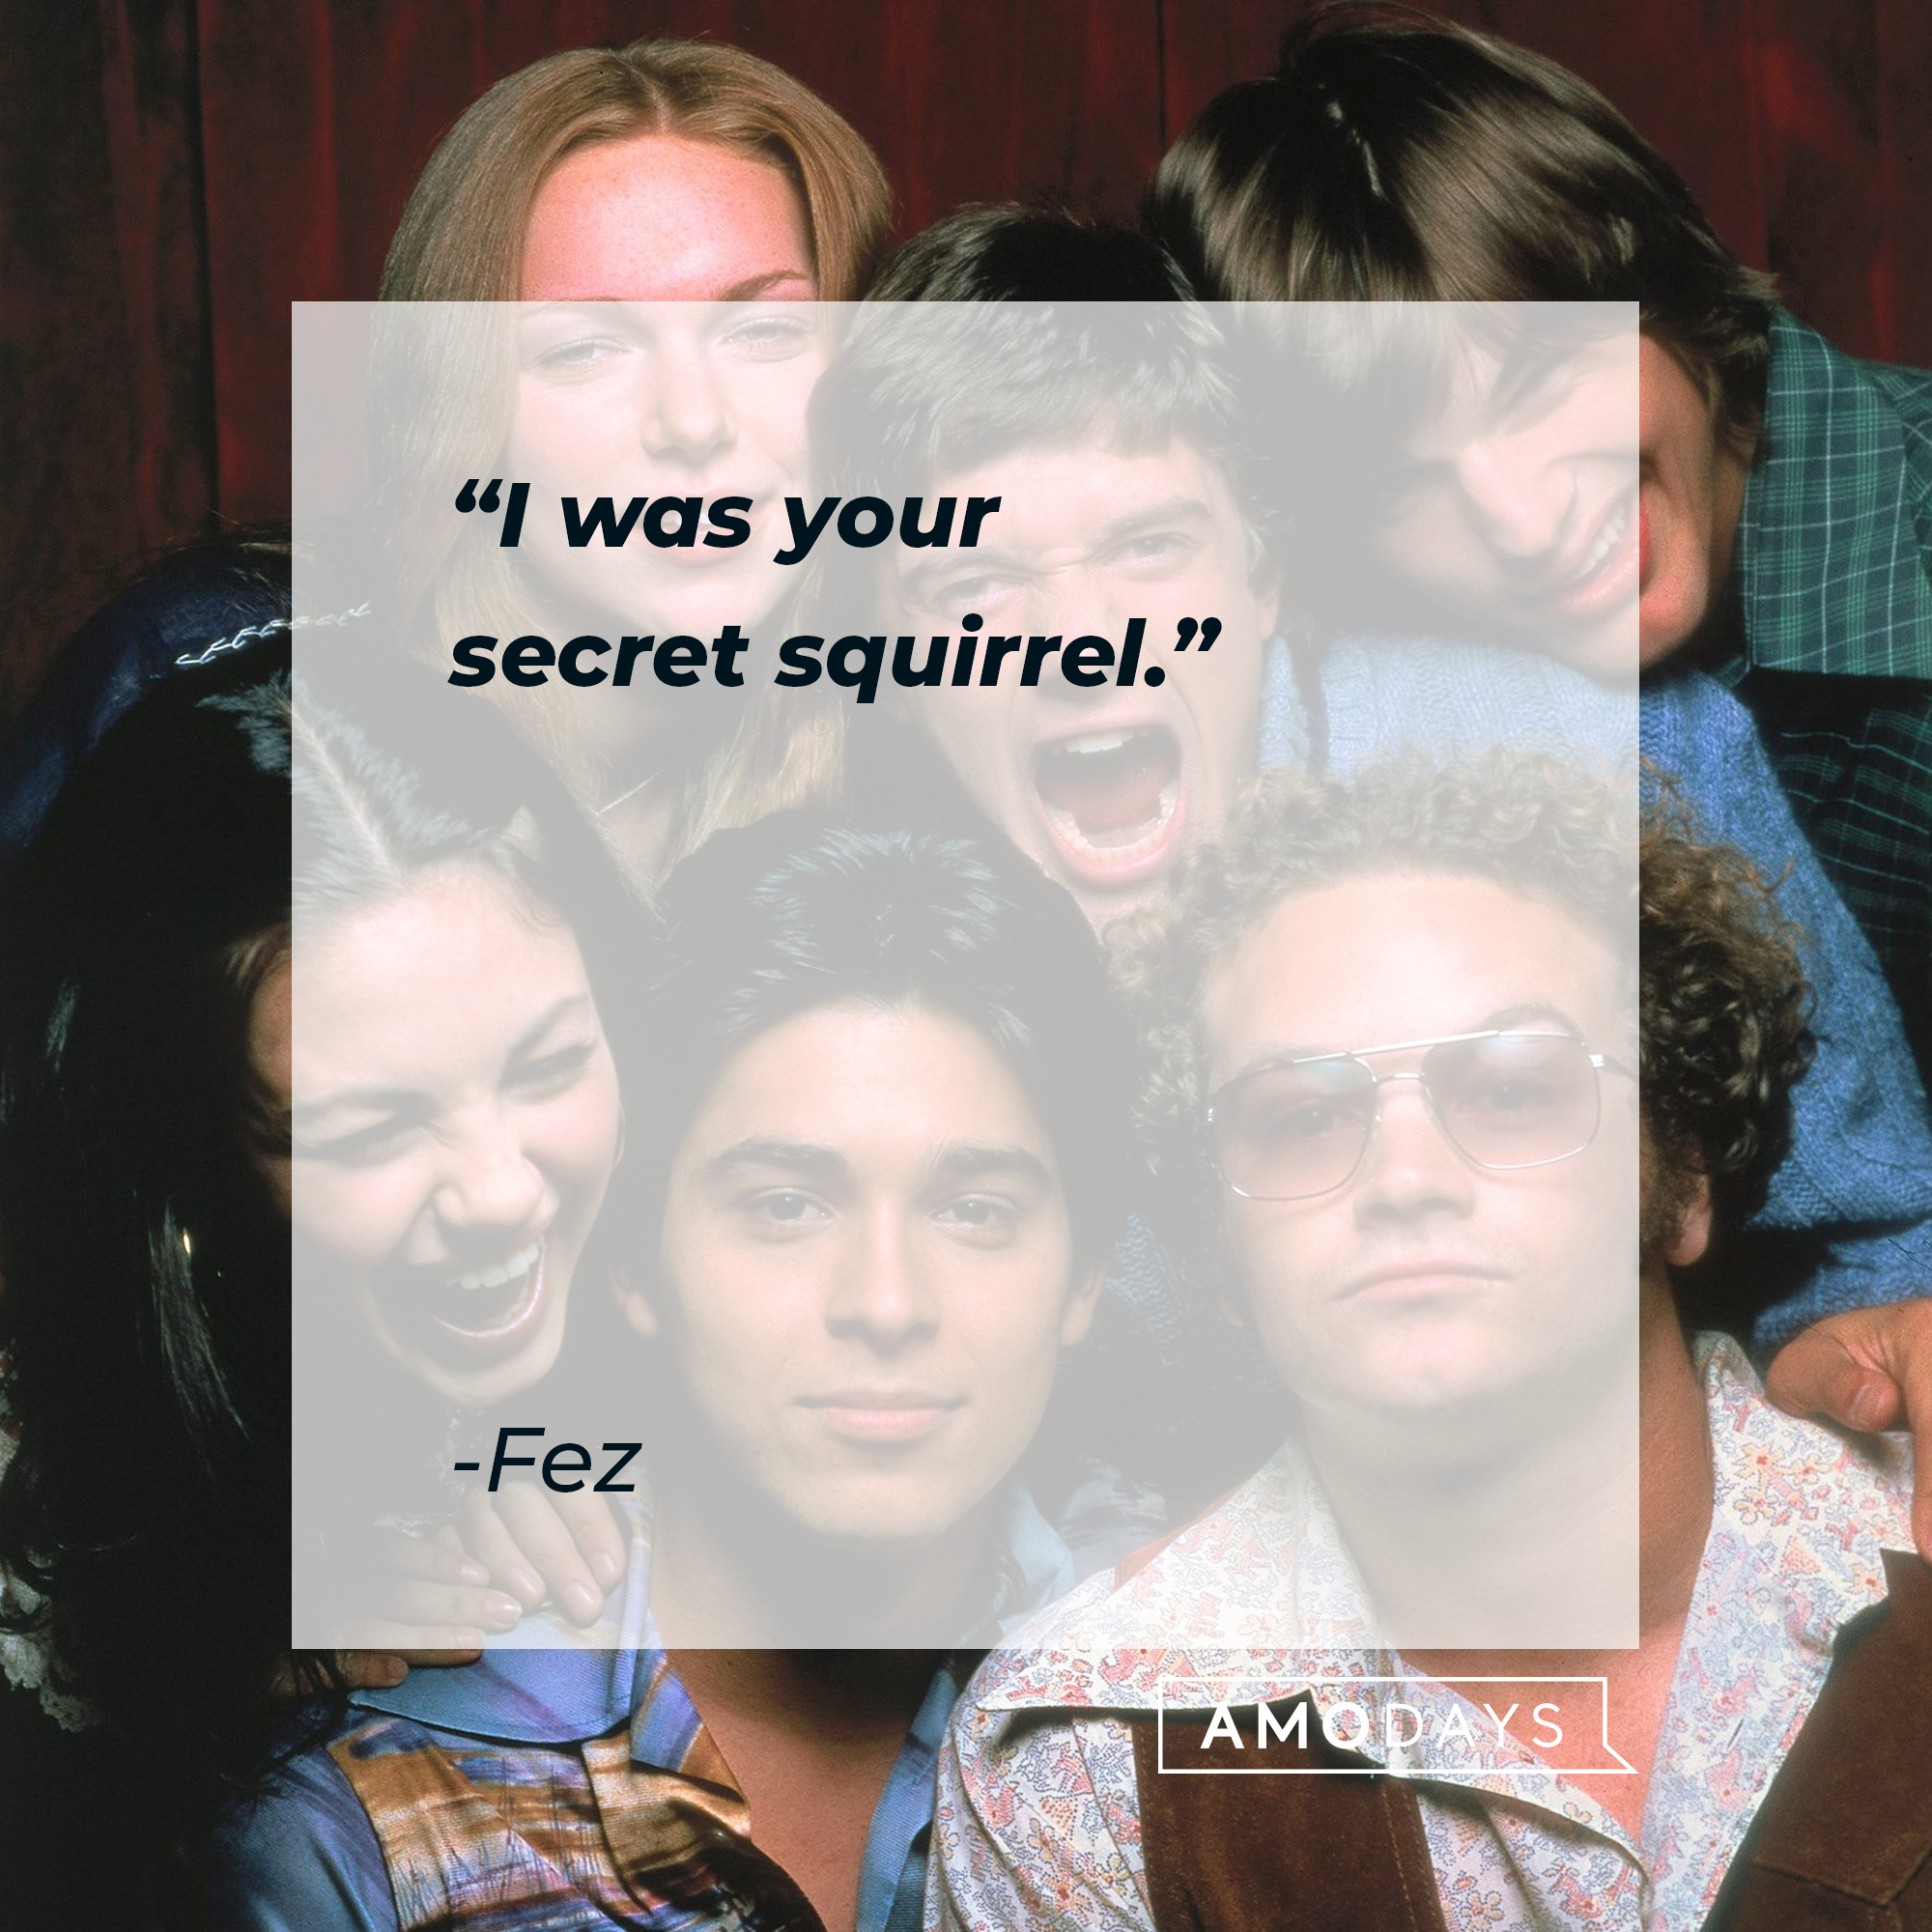 Fez's quote: "I was your secret squirrel." | Source: facebook.com/That-70s-Show-Official